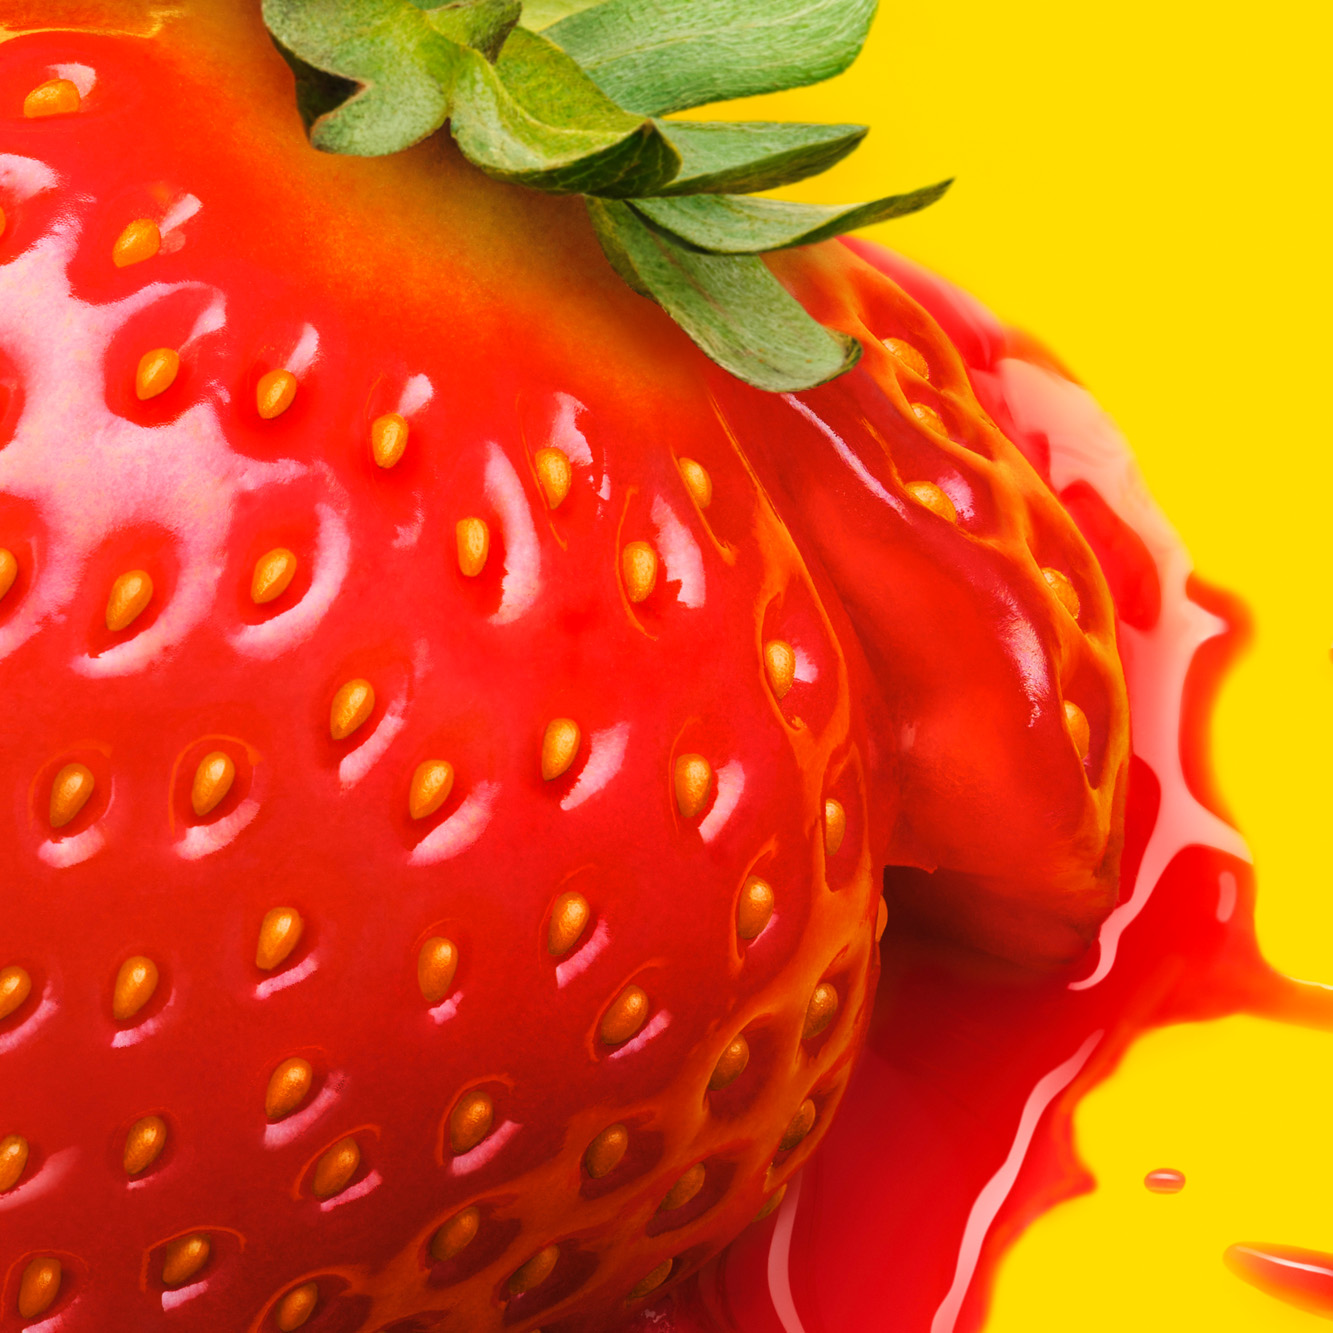 Strawberry detail